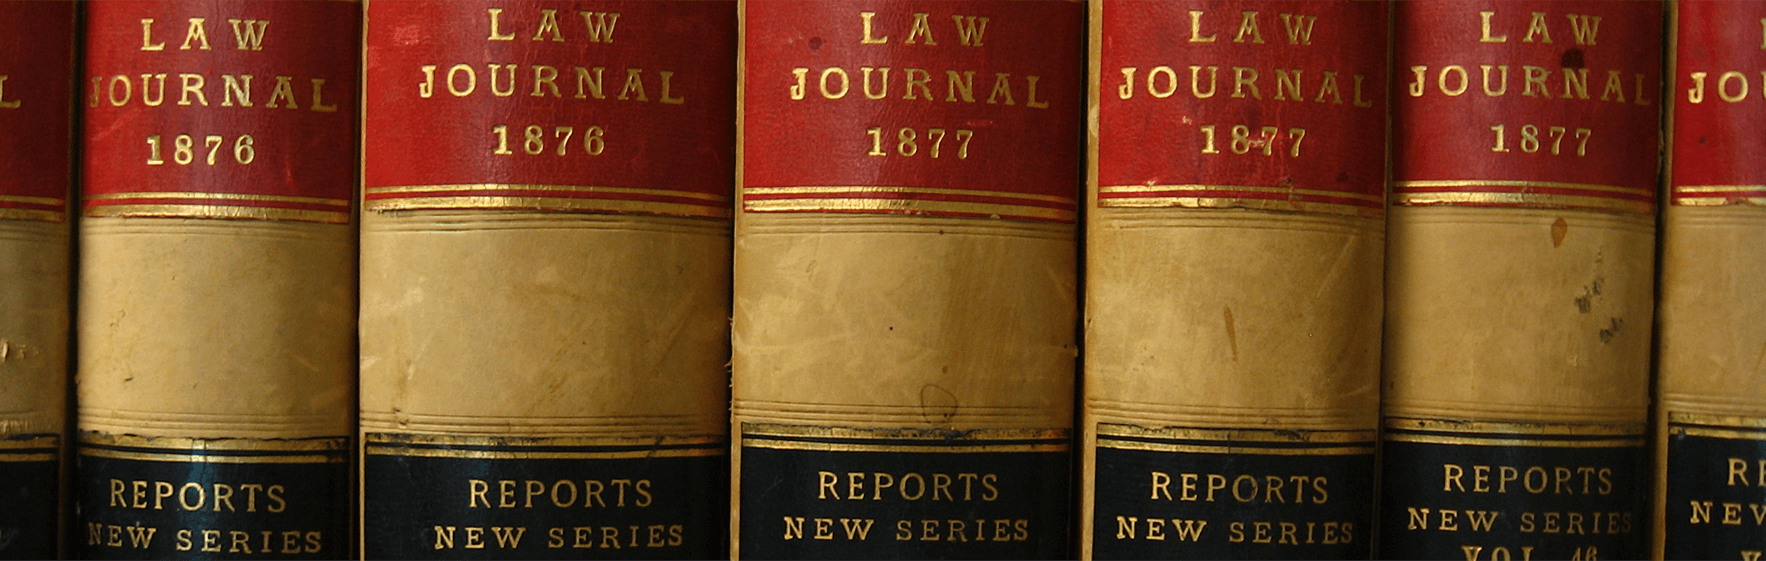 Antique law books on shelf